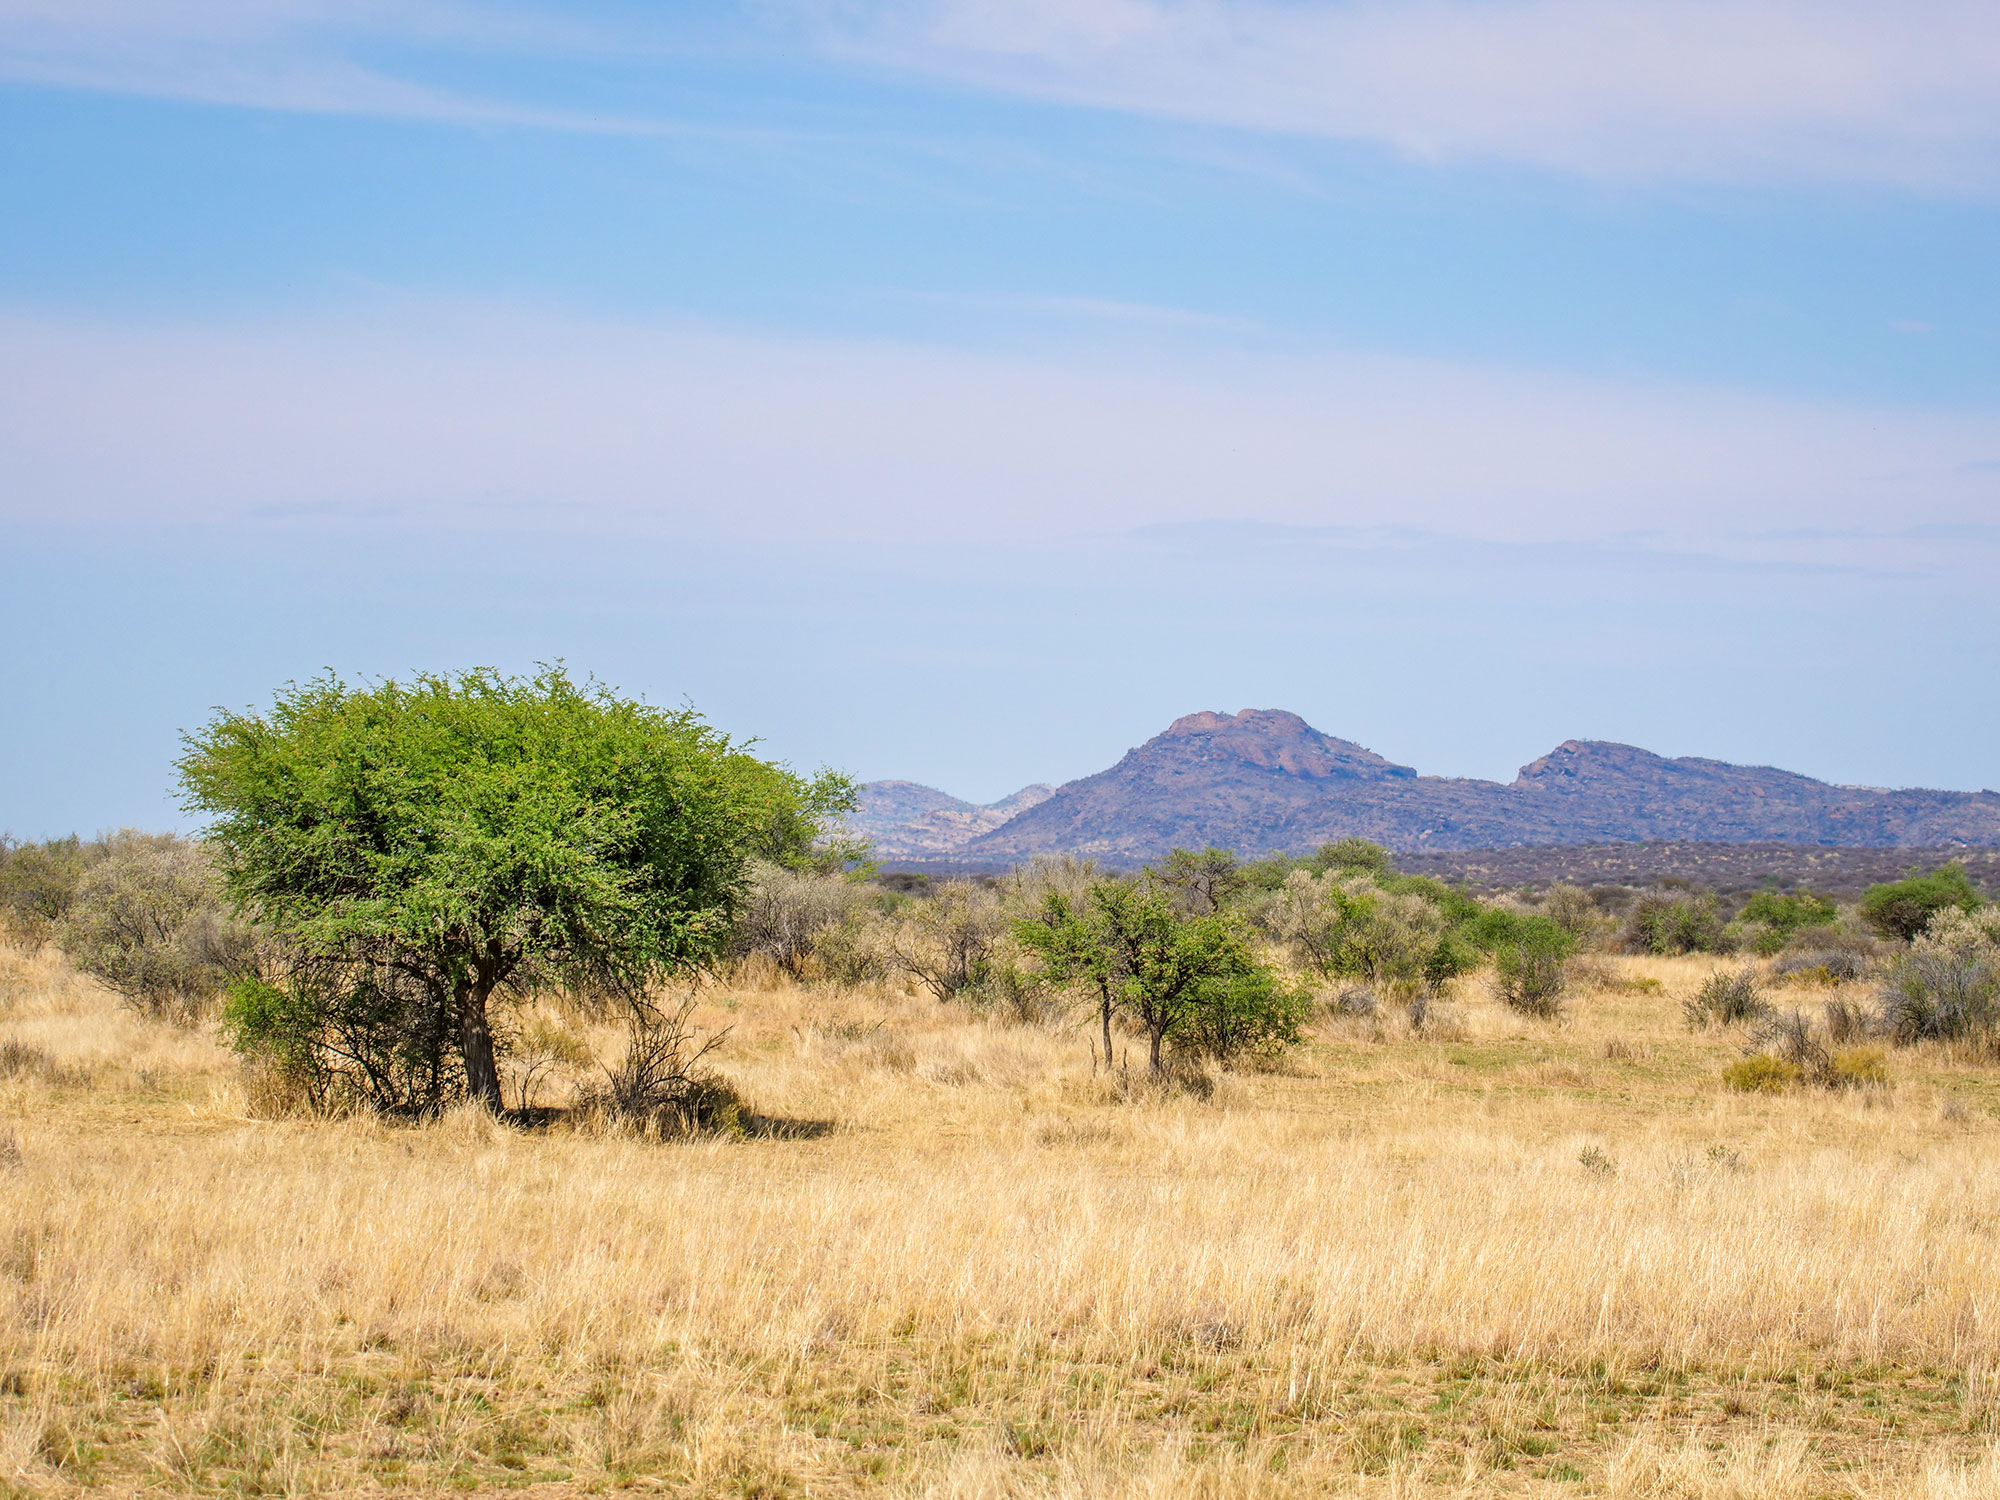 Views of the savannah from N/a’an ku sê (Naankuse) Wildlife Sanctuary in Namibia, Africa